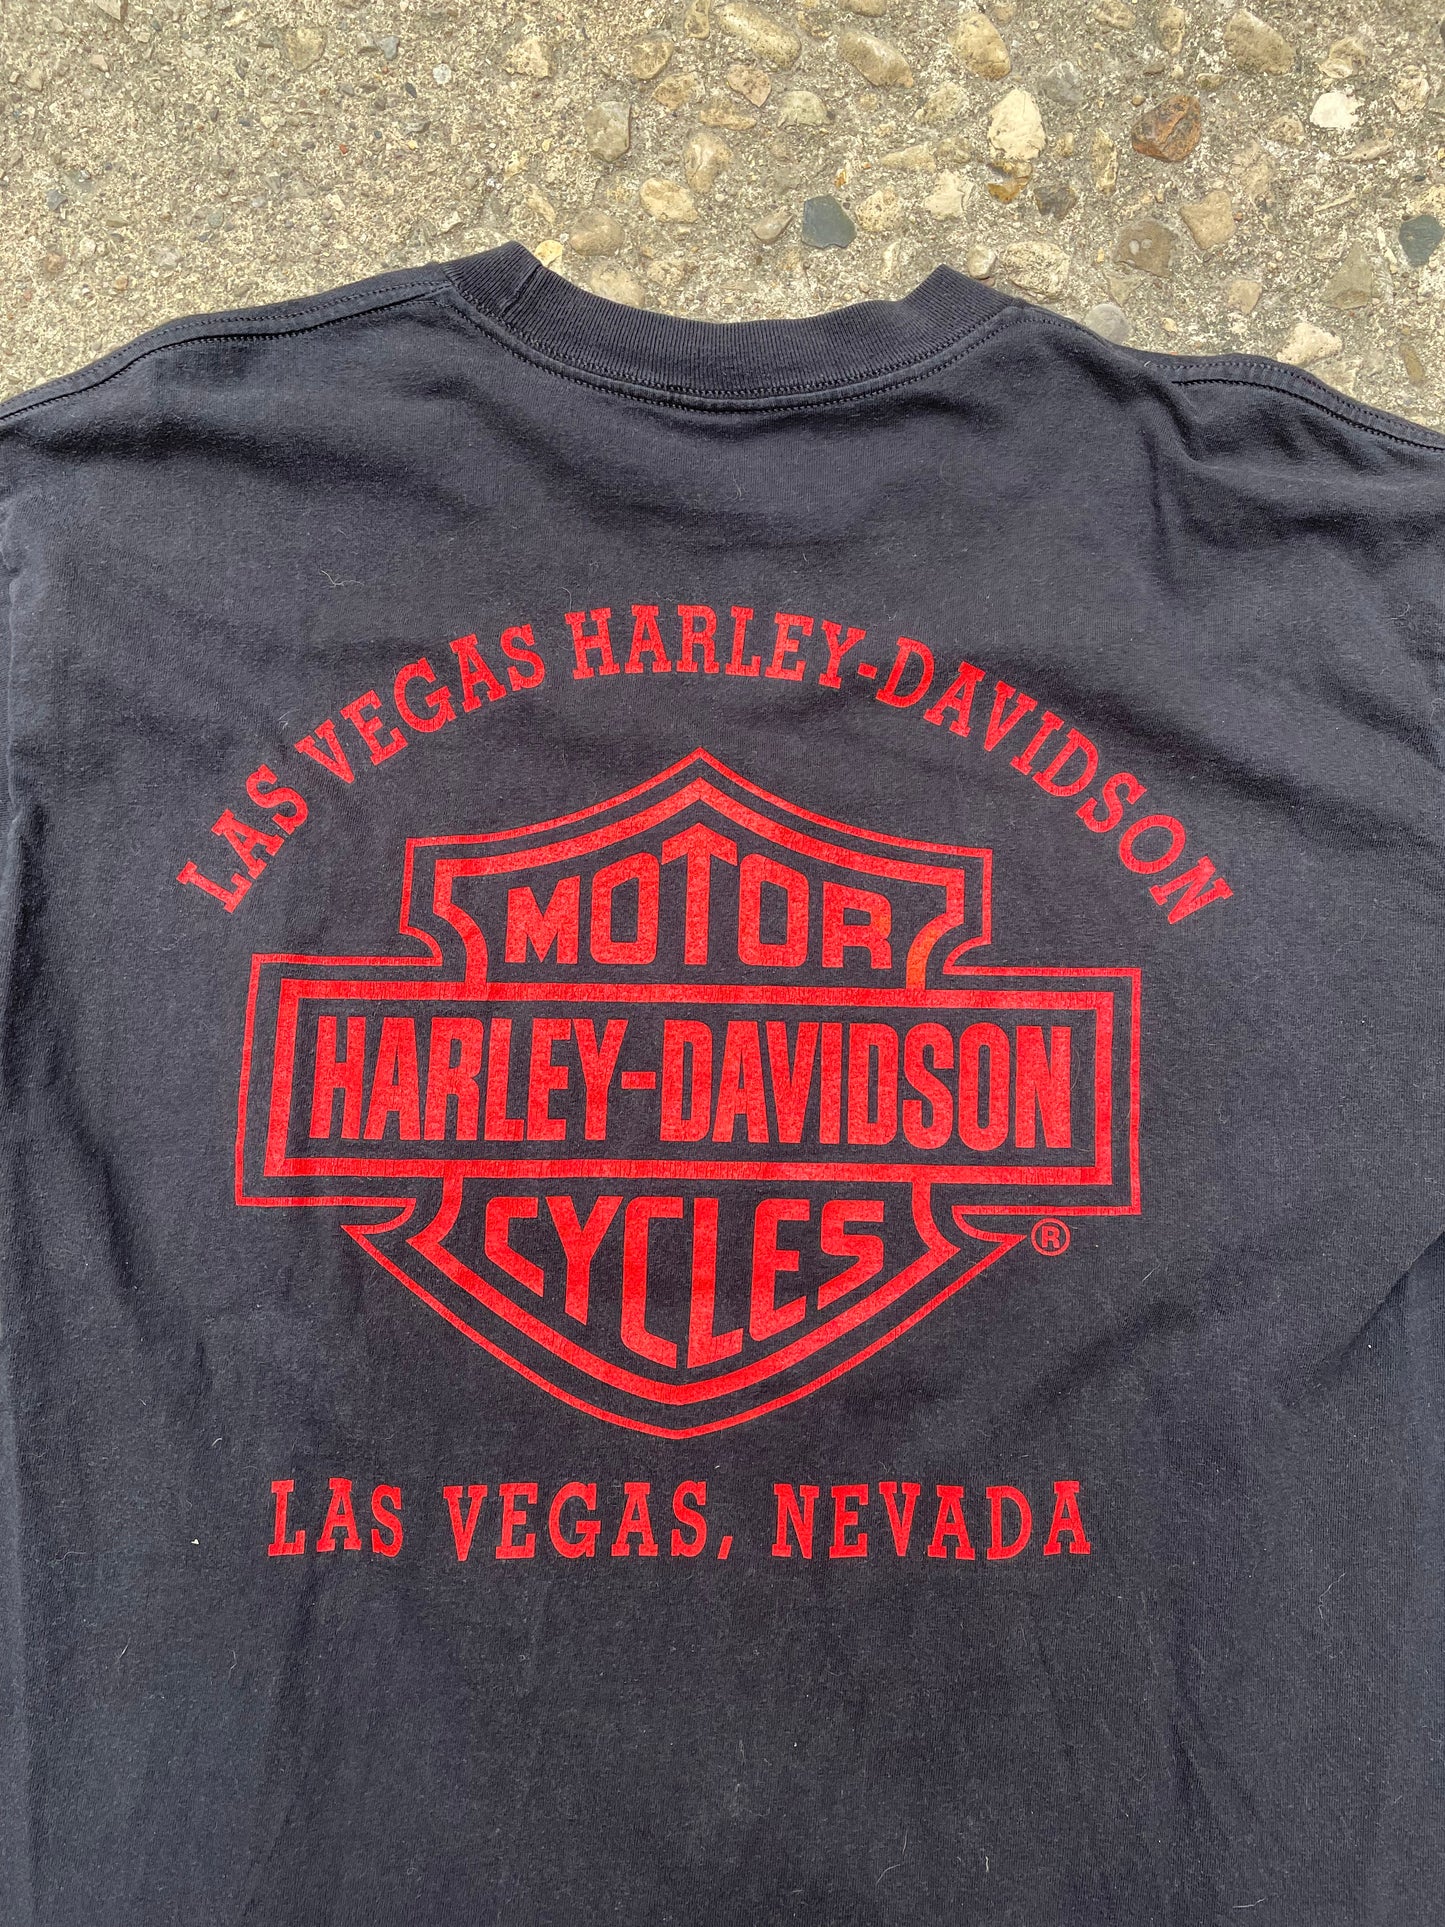 1998 Harley Davidson Motorcycles 'If I Have to Explain...' T-Shirt - XL